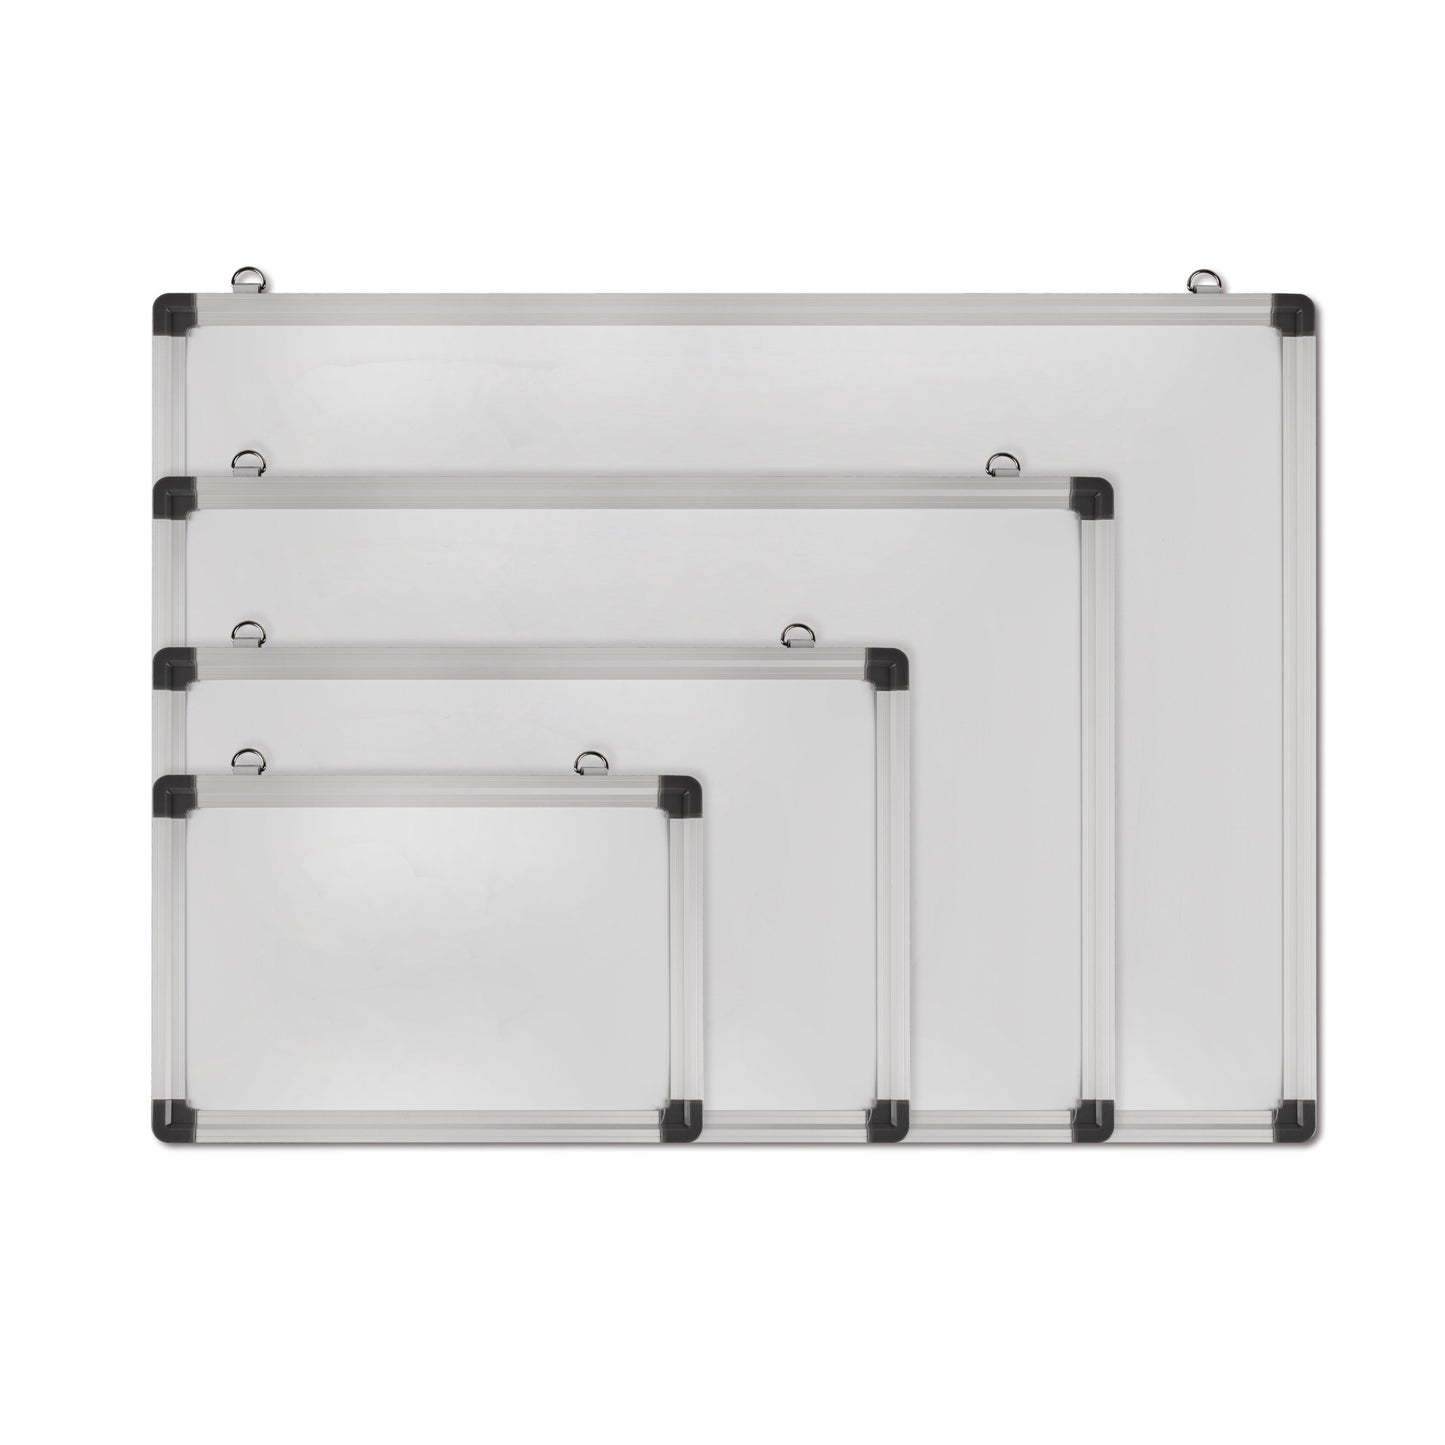 M25 Magnetic Aluminium Frames Wall Mounted Dry Erase Whiteboards, China Factory Customized White Board - Premium magnetic whiteboard from Madic Whiteboard - Madic Whiteboard